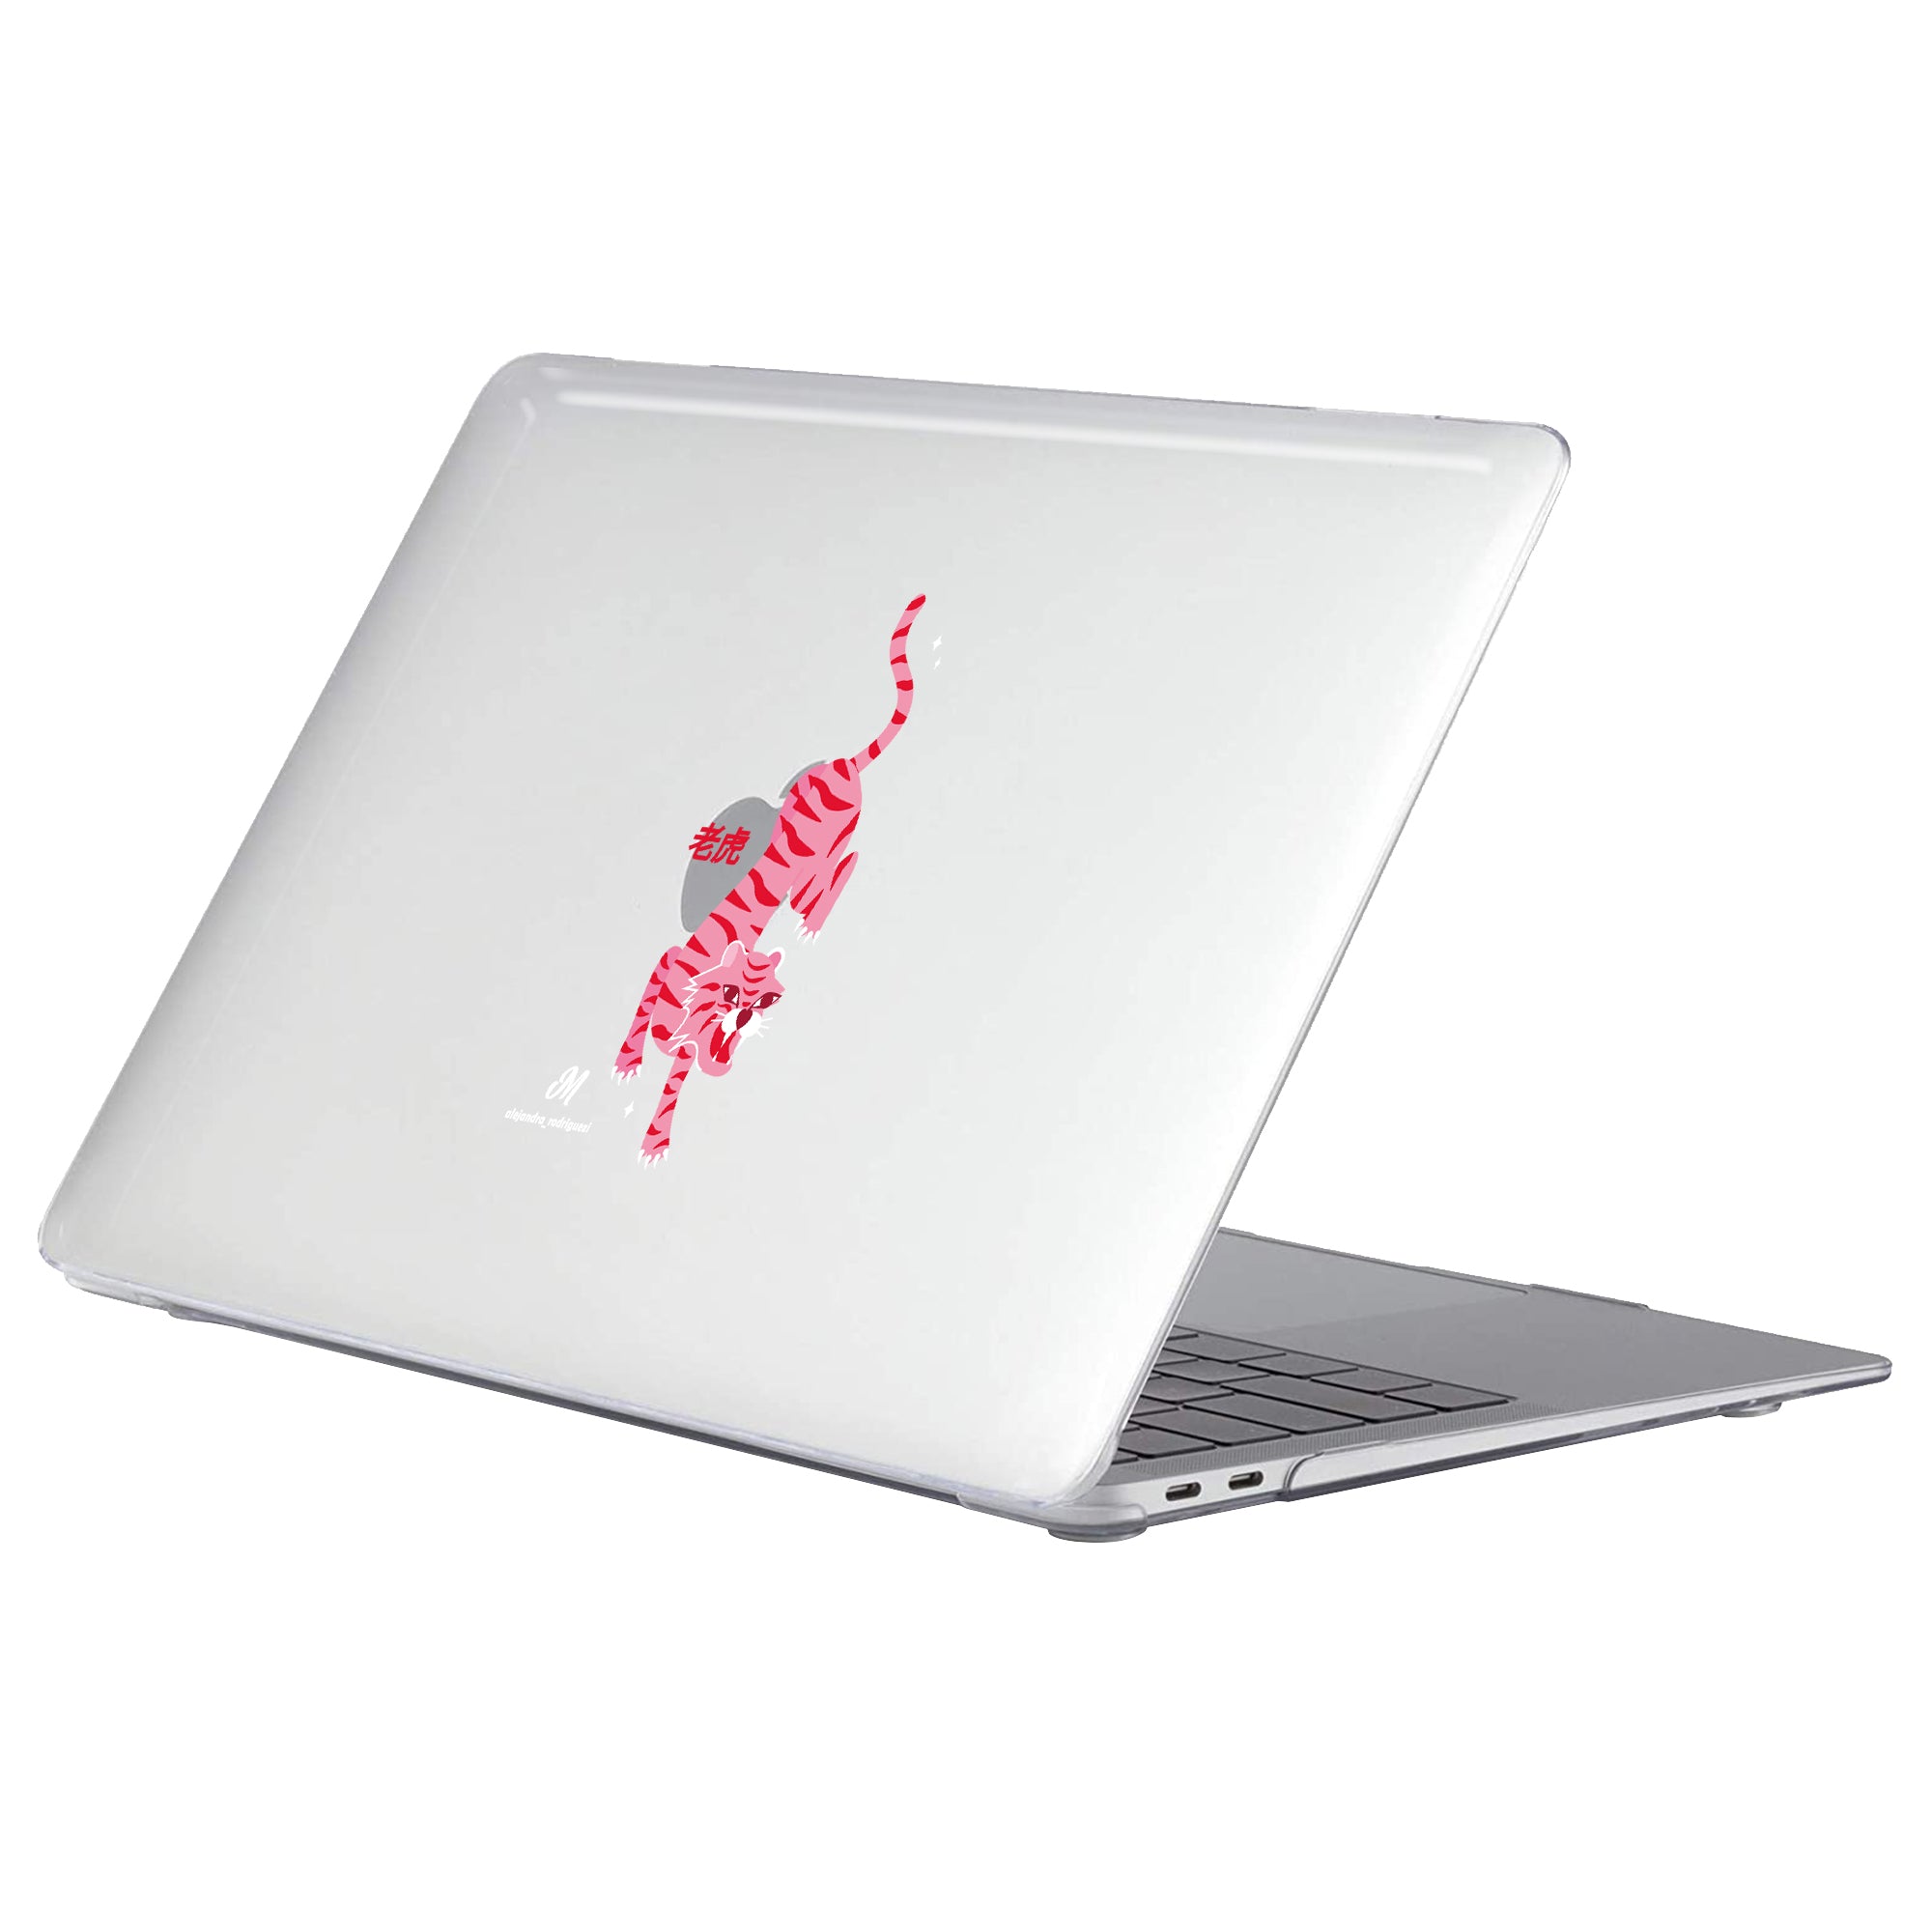 Tigre MacBook Case - Mandala Cases